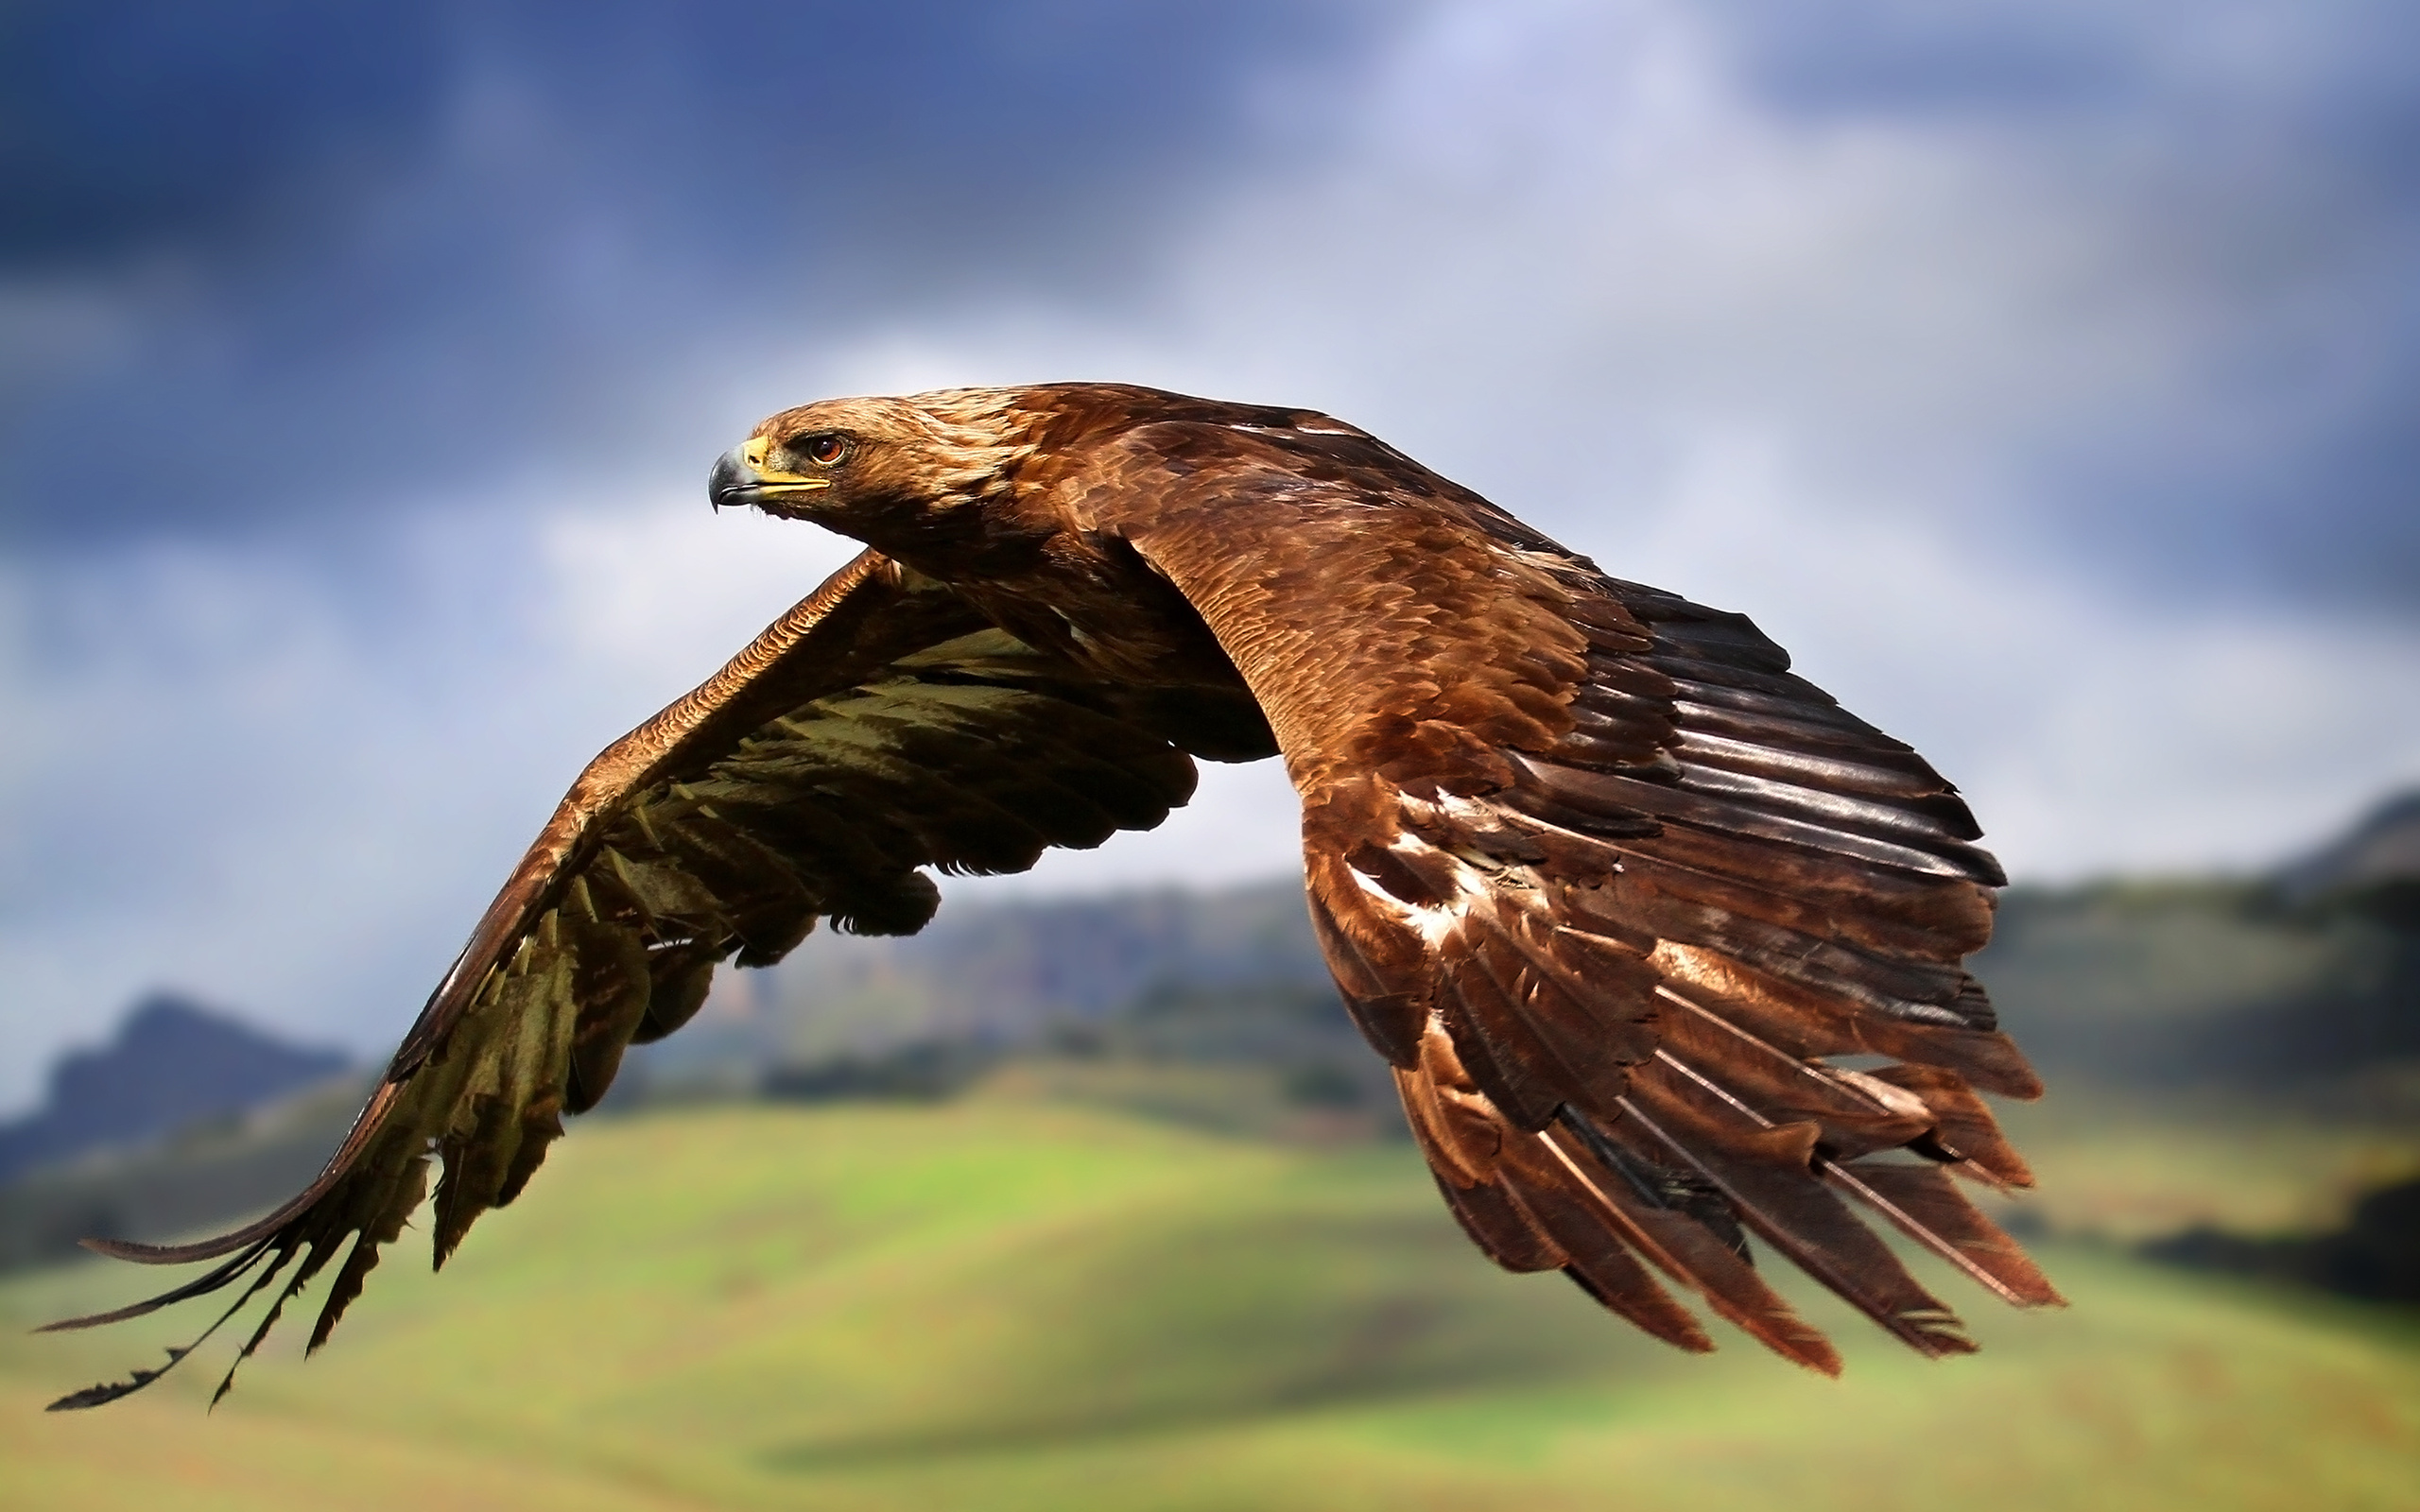 259459 descargar imagen animales, águila real, ave, águila, aves: fondos de pantalla y protectores de pantalla gratis